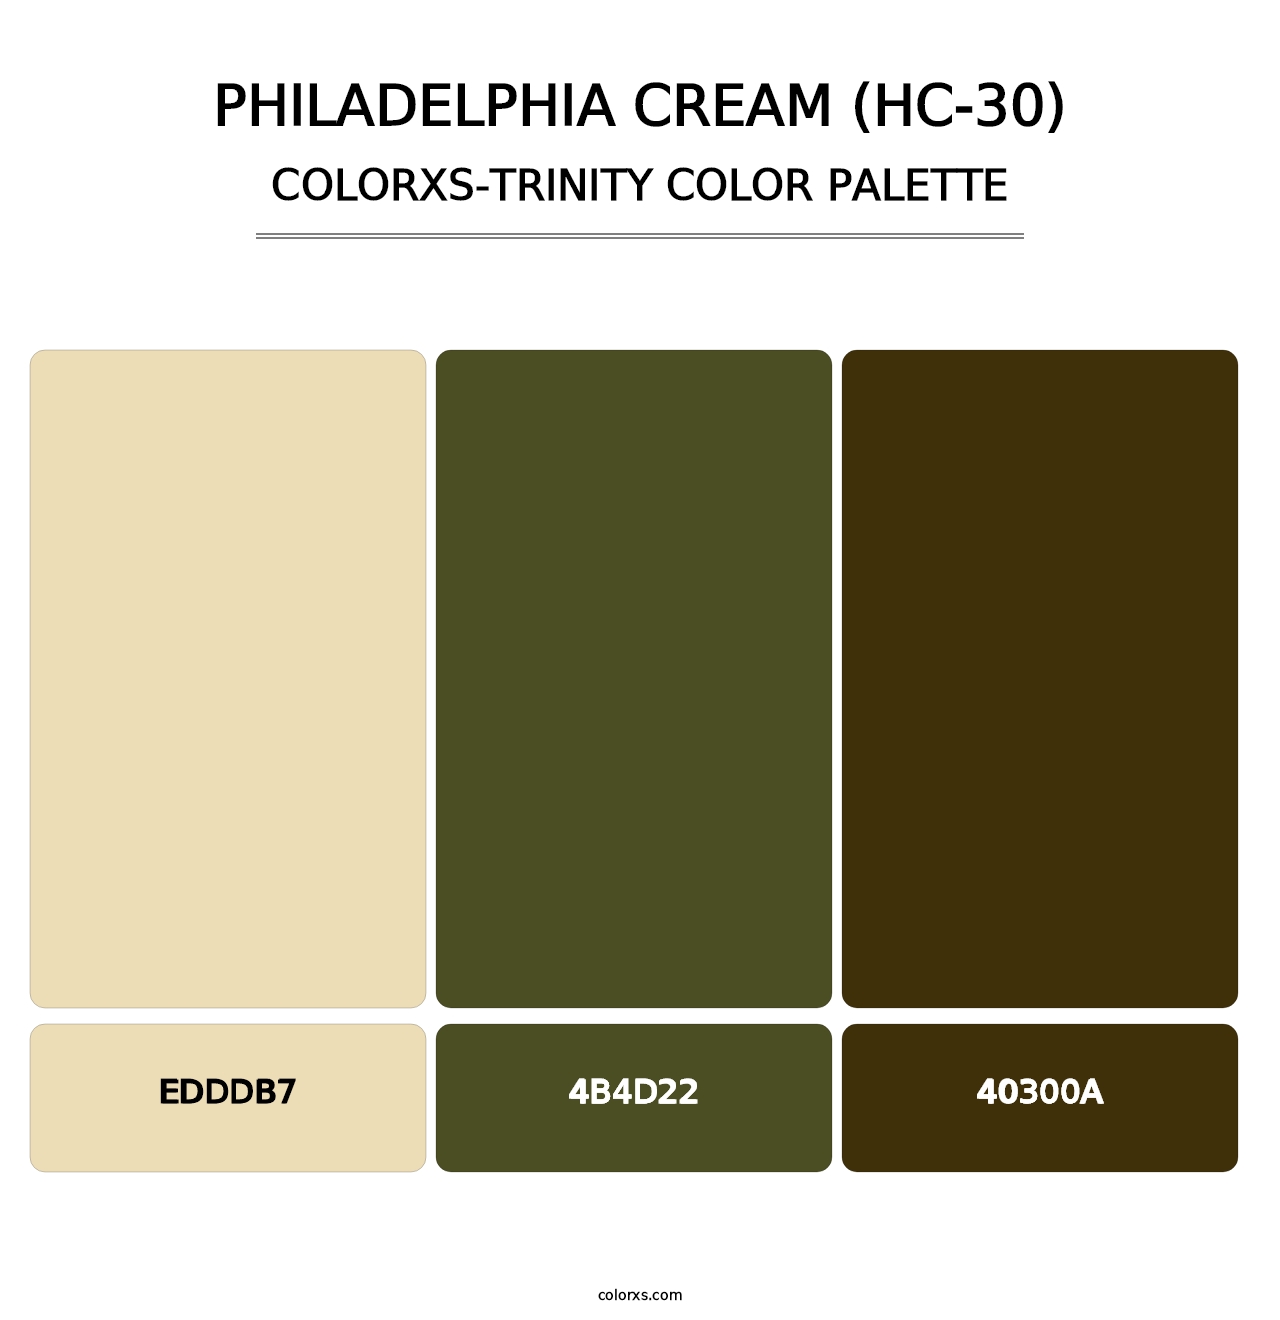 Philadelphia Cream (HC-30) - Colorxs Trinity Palette